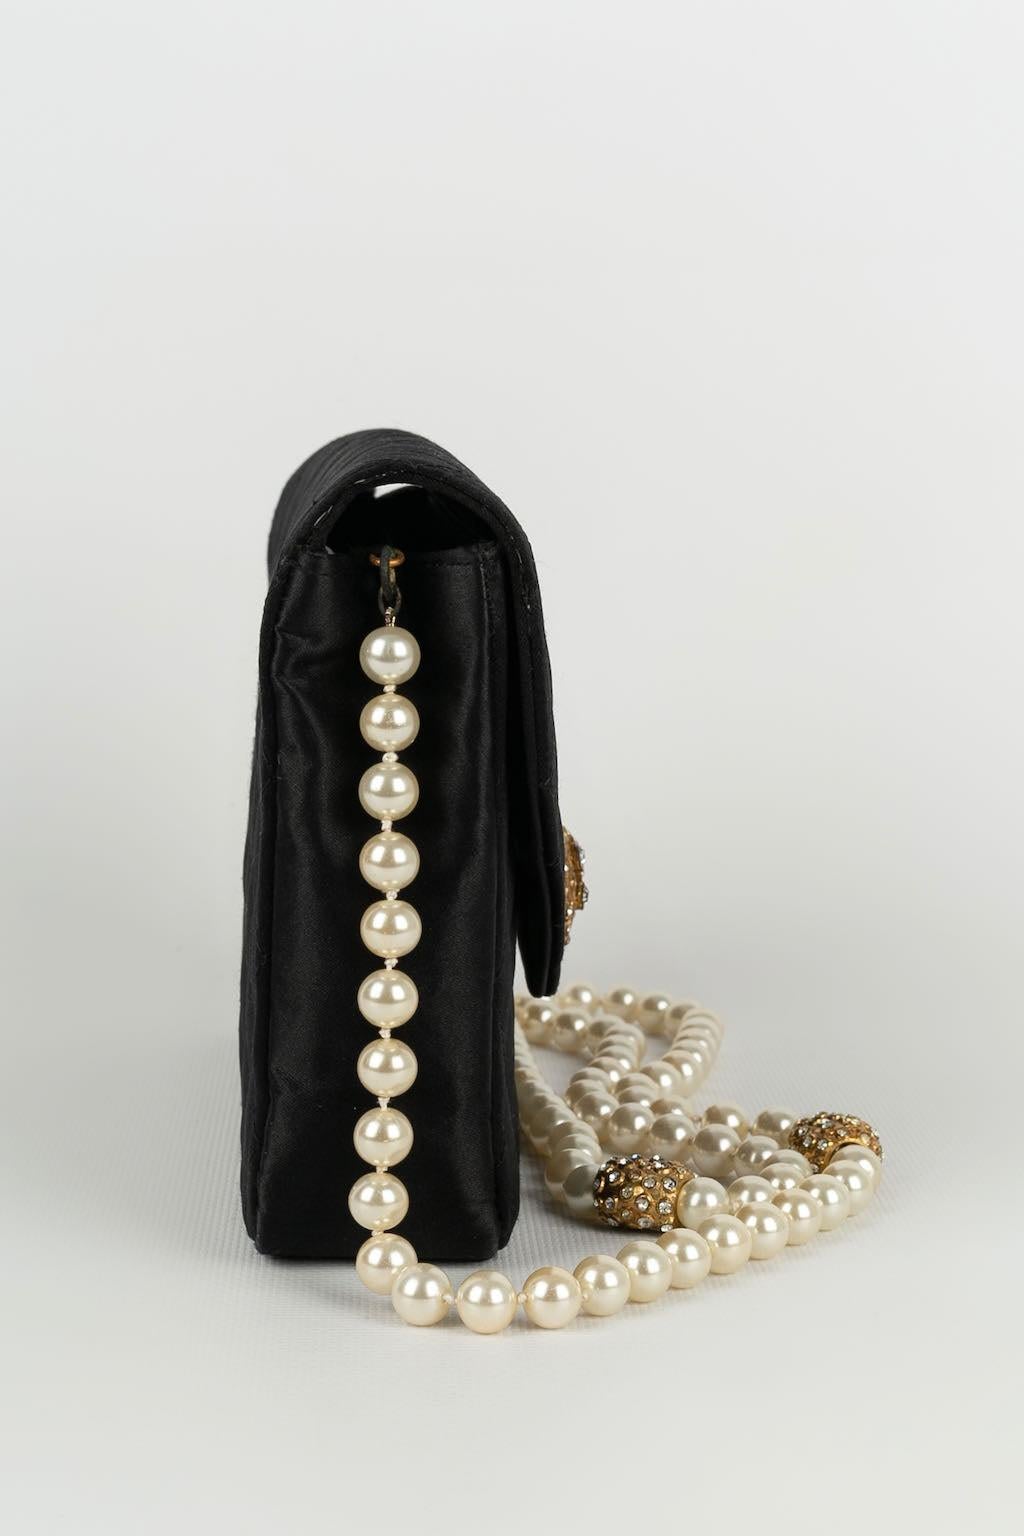 Women's Chanel Jewel Evening Black Bag For Sale